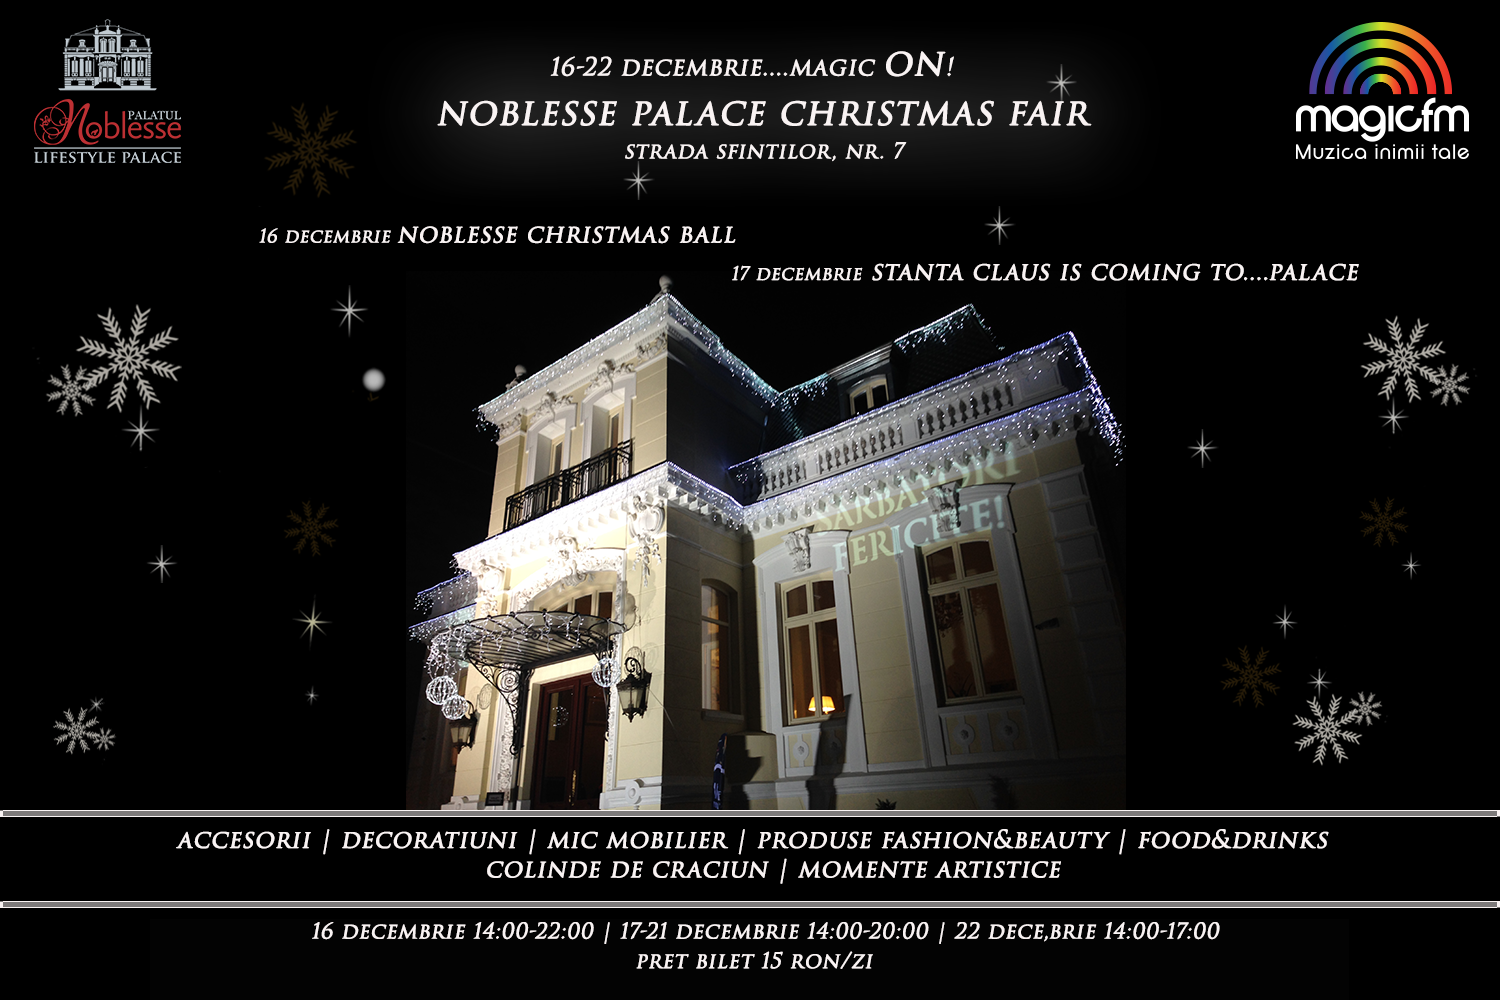 Noblesse Palace Christmas Fair Magic On